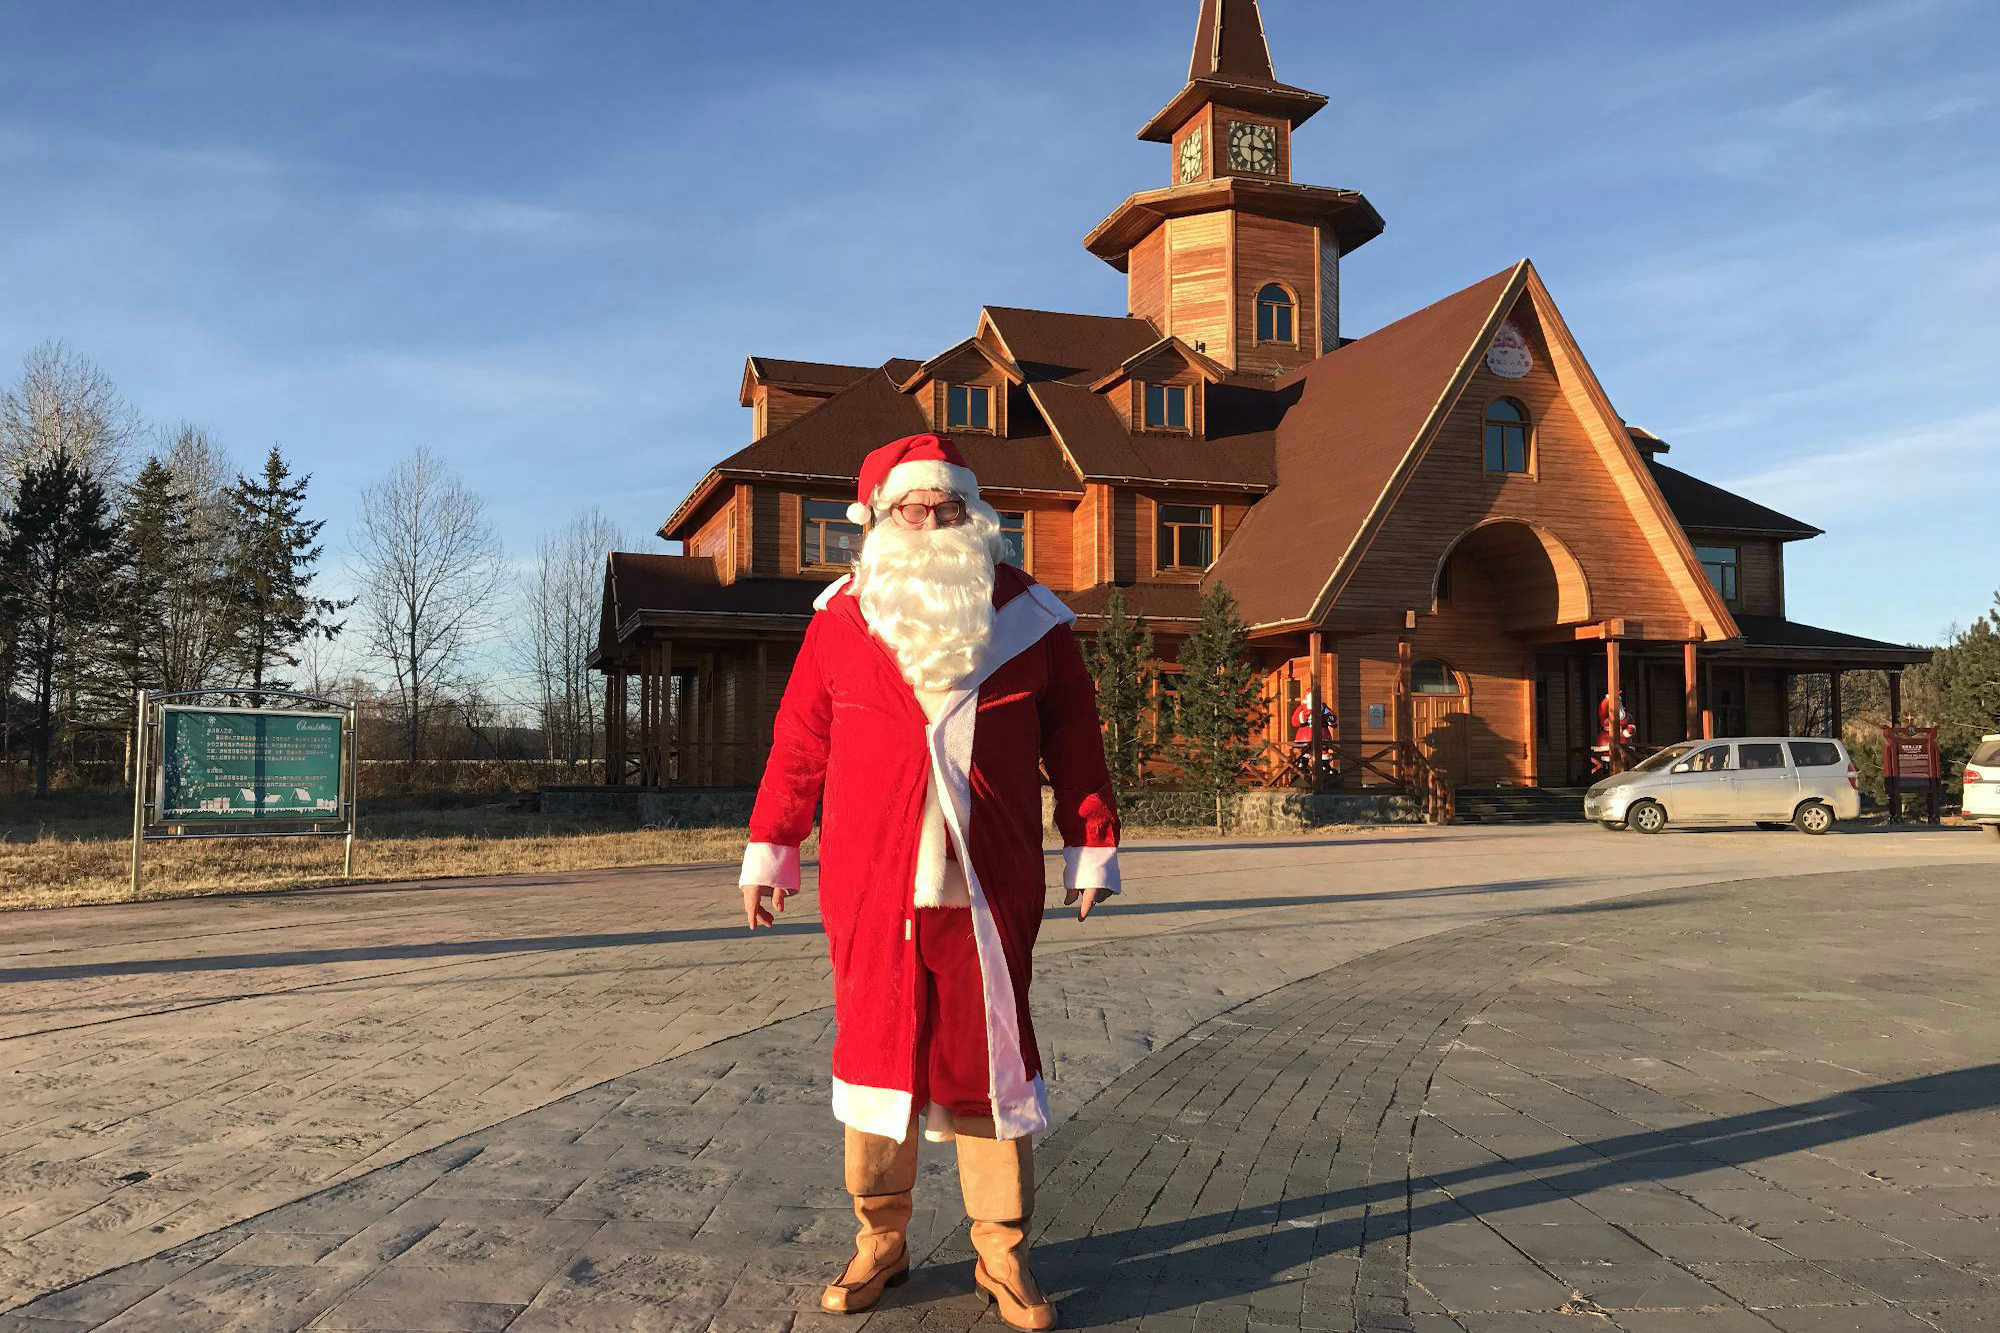 The 11th Finnish Santa Claus Pauli